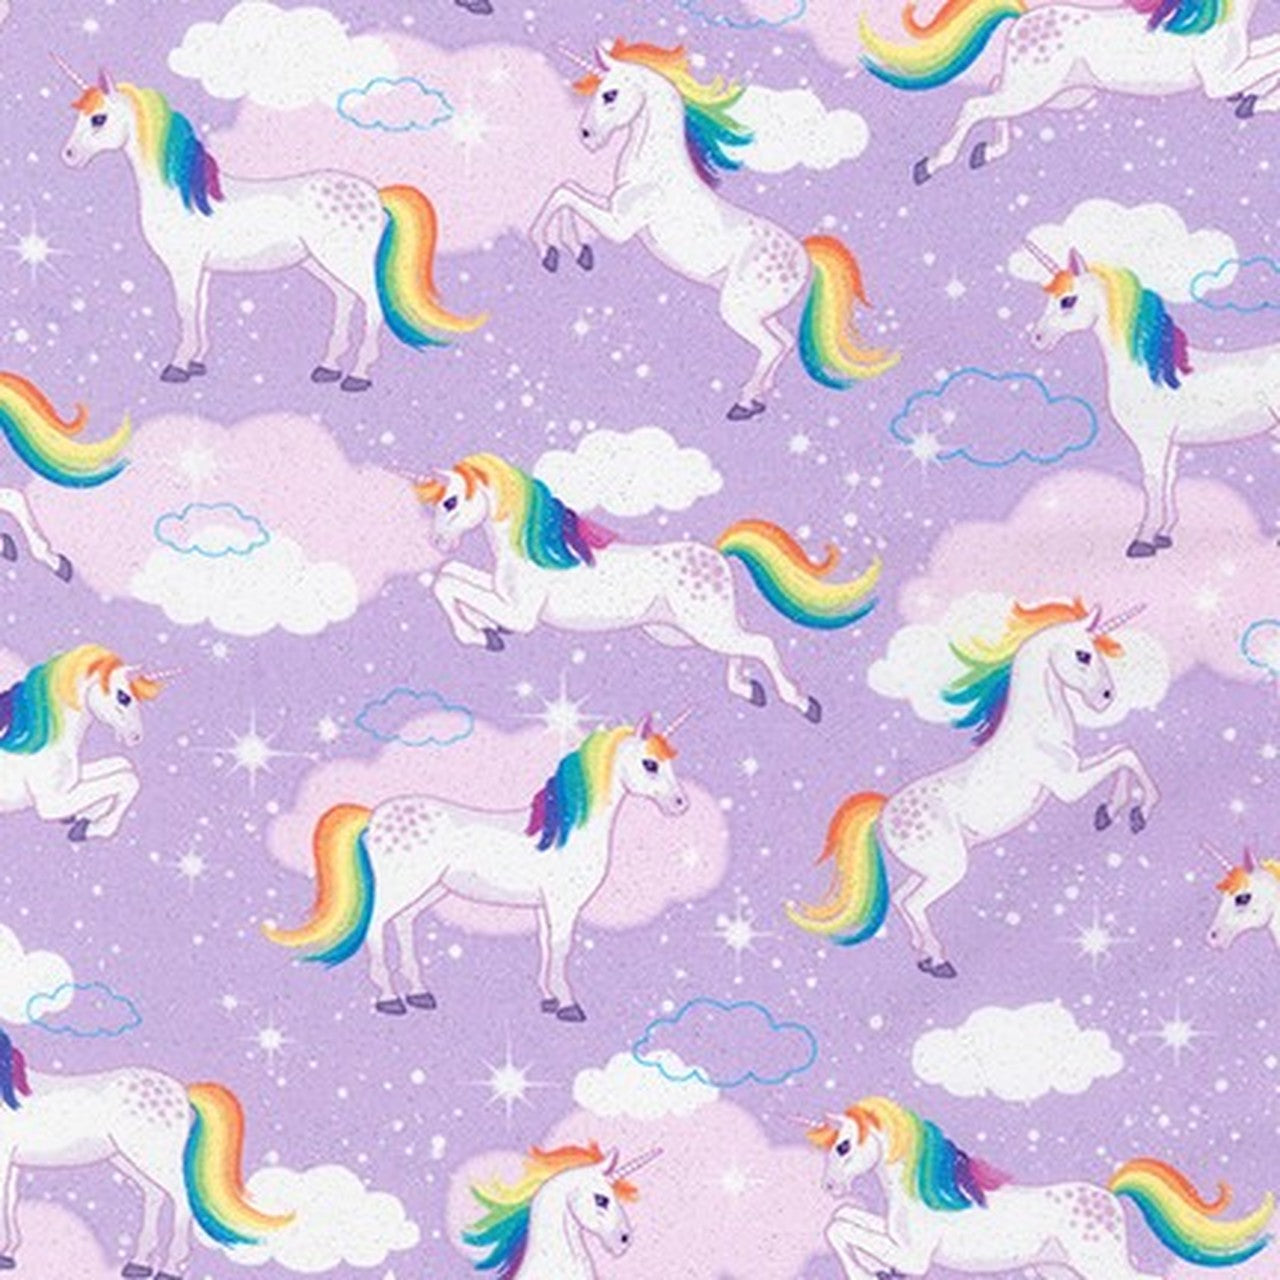 Unicorn Lavender - Enchanted Unicorns - Robert Kaufman Glitter Cotton Fabric ✂️ £13 pm